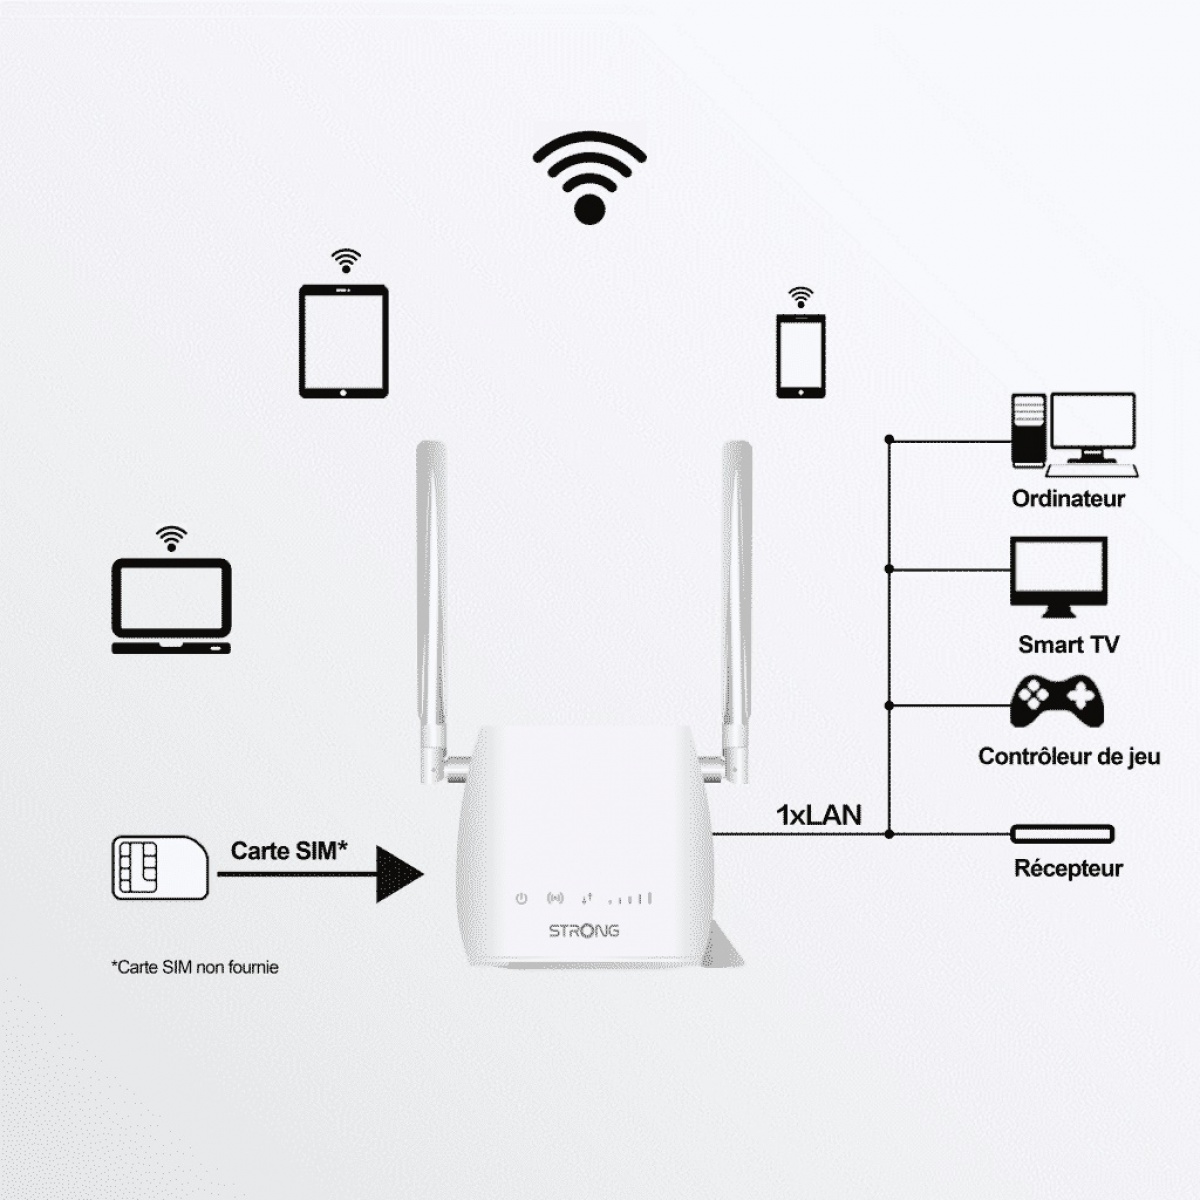 Router 4g LTE alta velocità di navigazione in internet